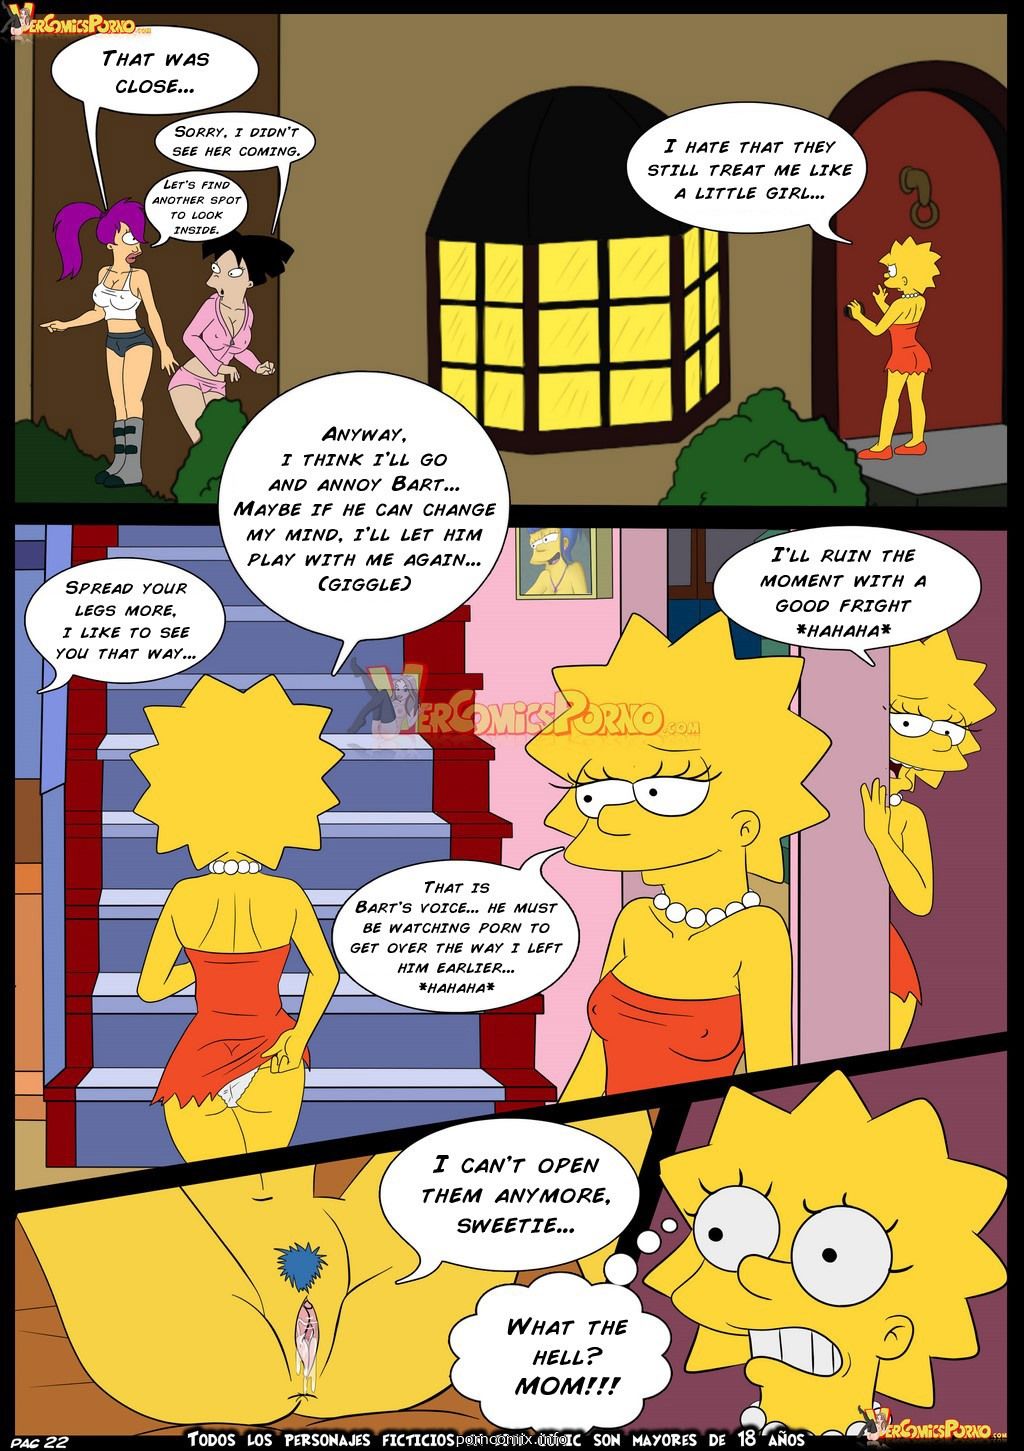 [CROC] The Simpsons / Futurama - Future purchase page 23